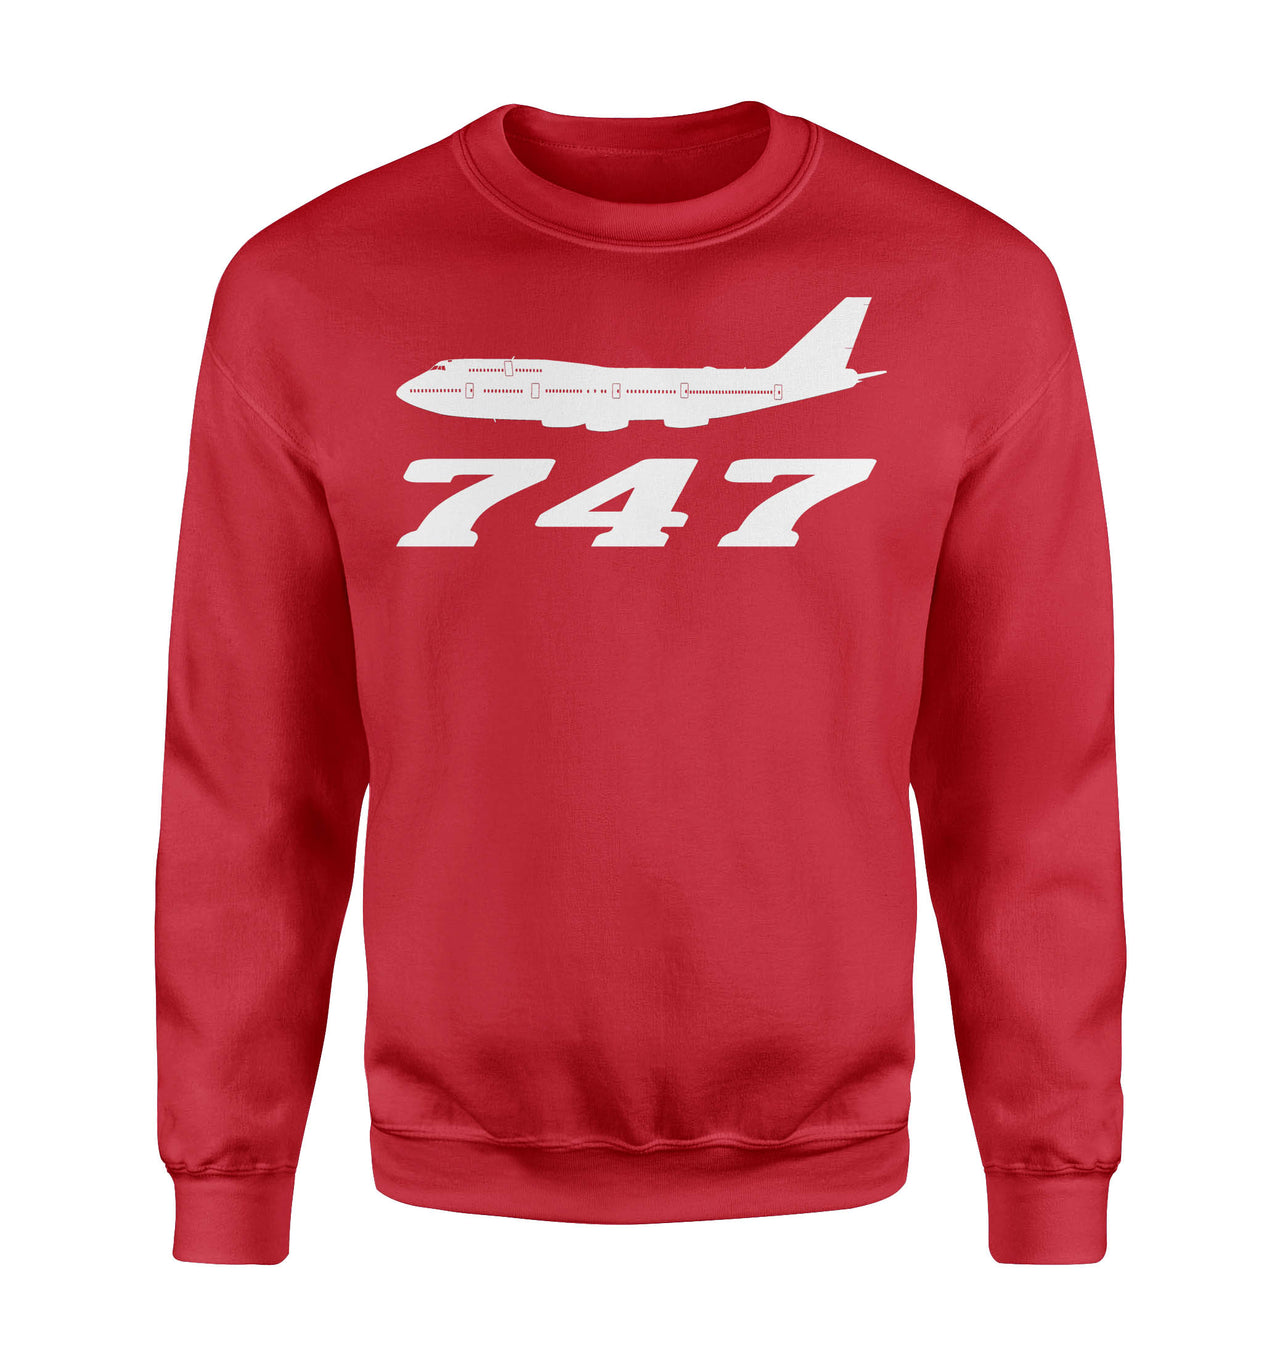 Special The Boeing 747 Design Designed Sweatshirts